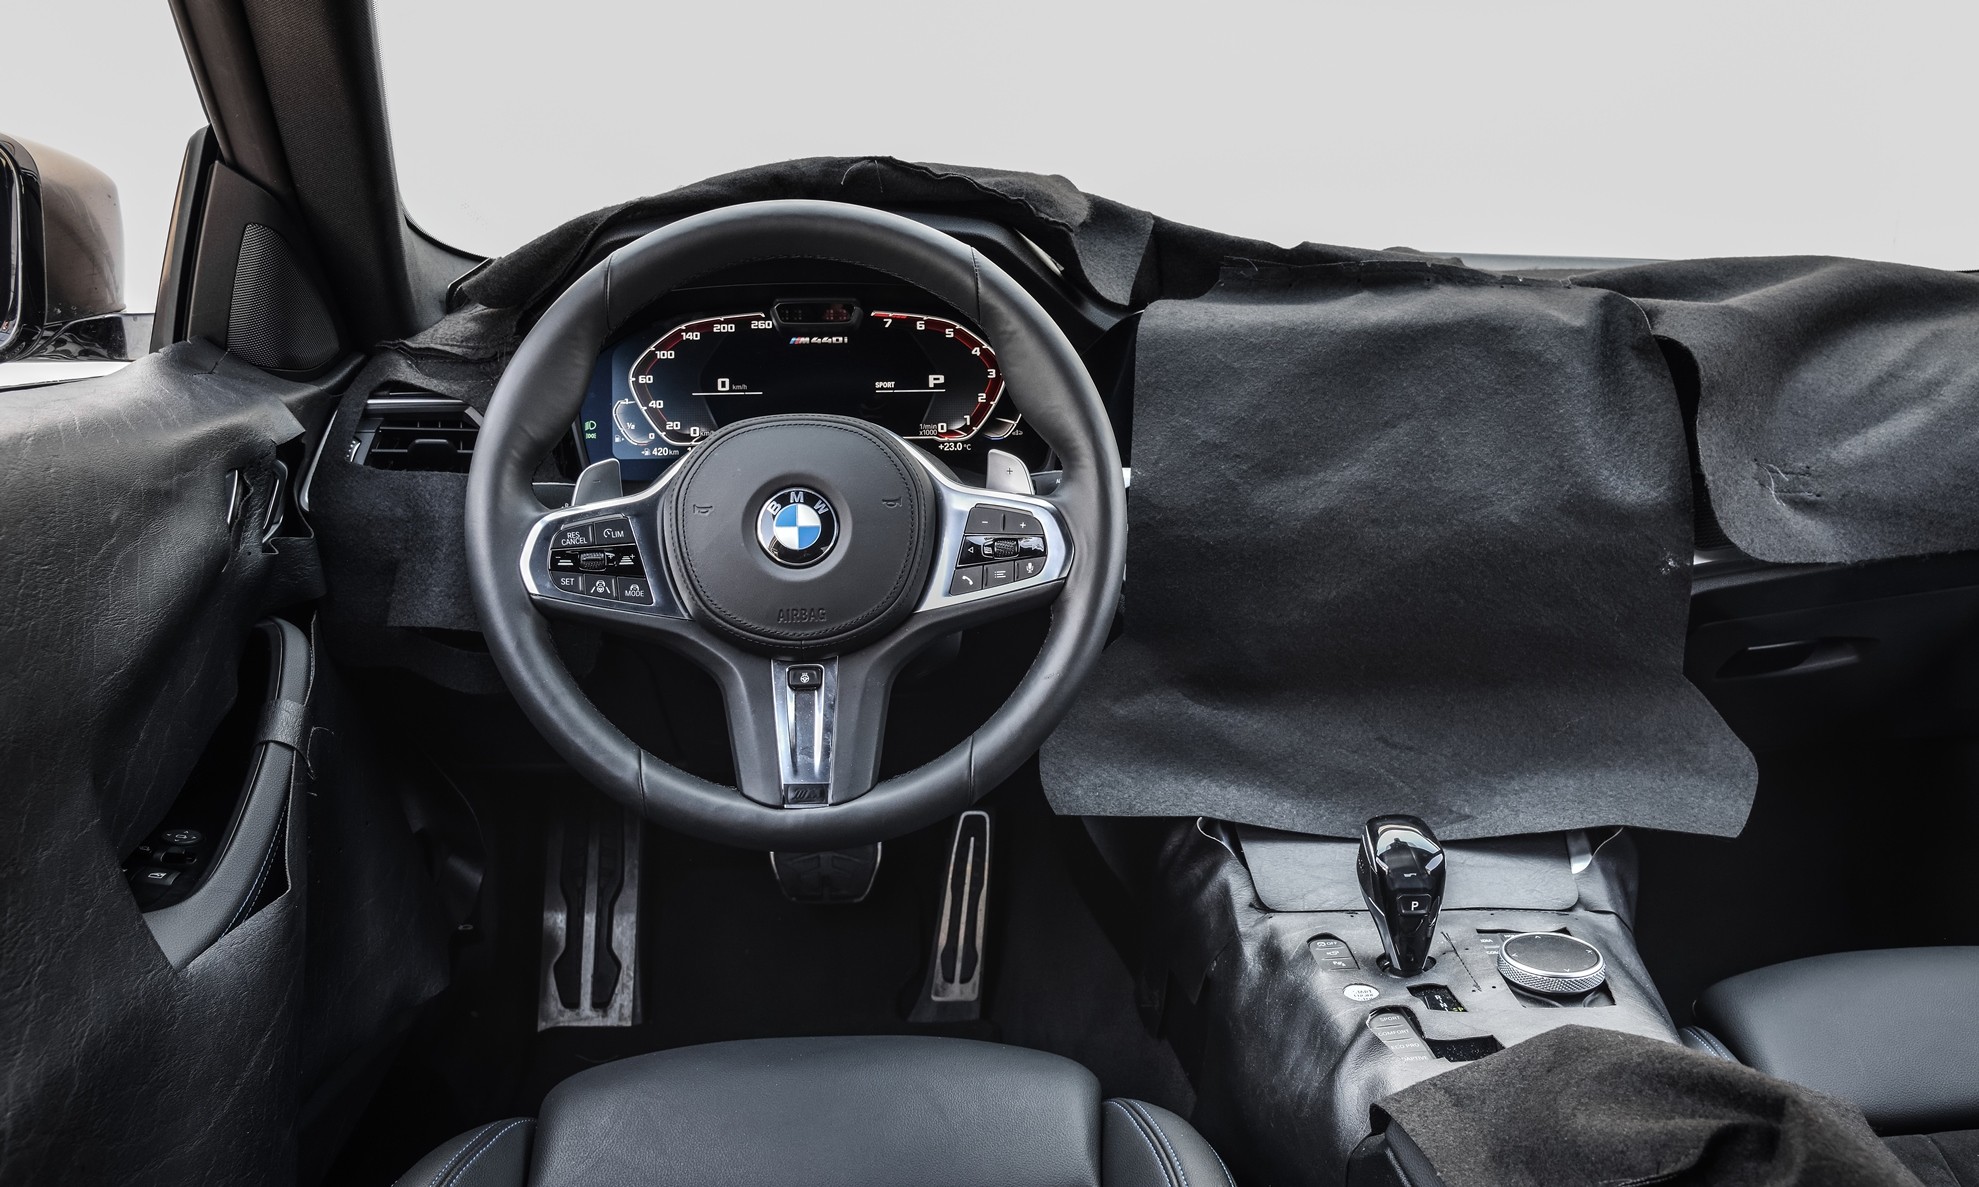 BMW 4 Series Coupe interior